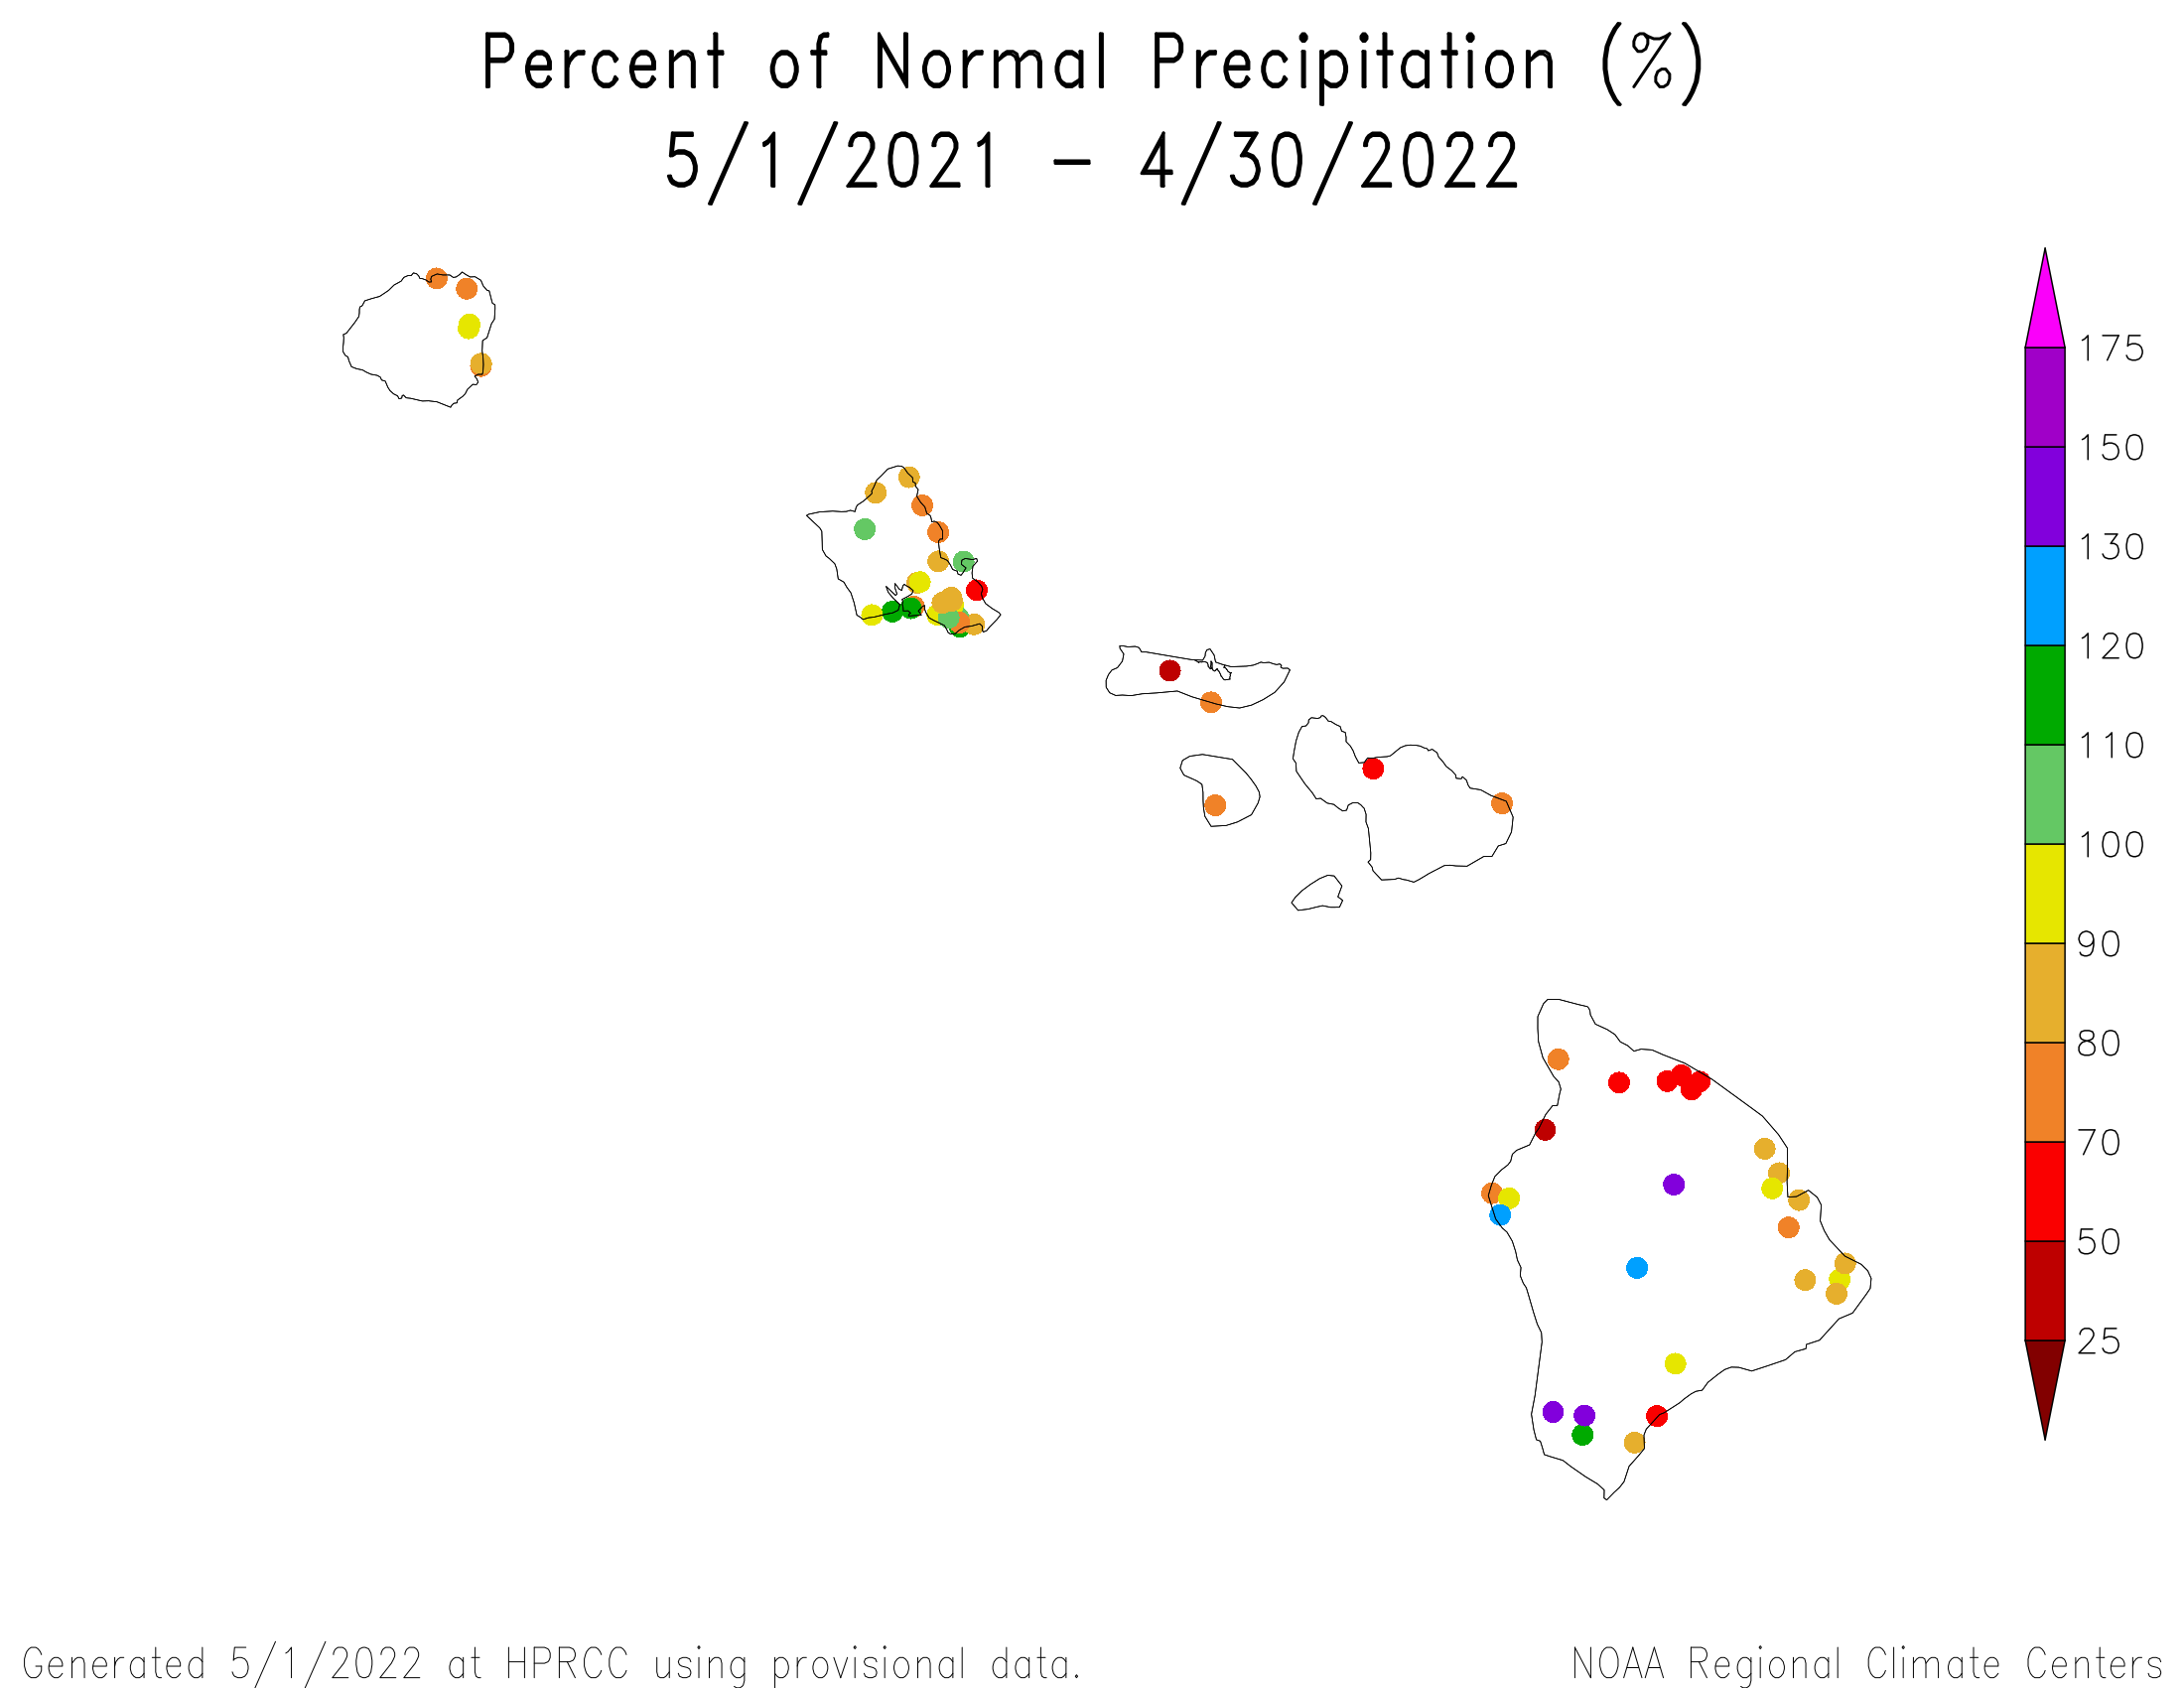 Hawaii Percent of Normal Precipitation, May 2021-April 2022